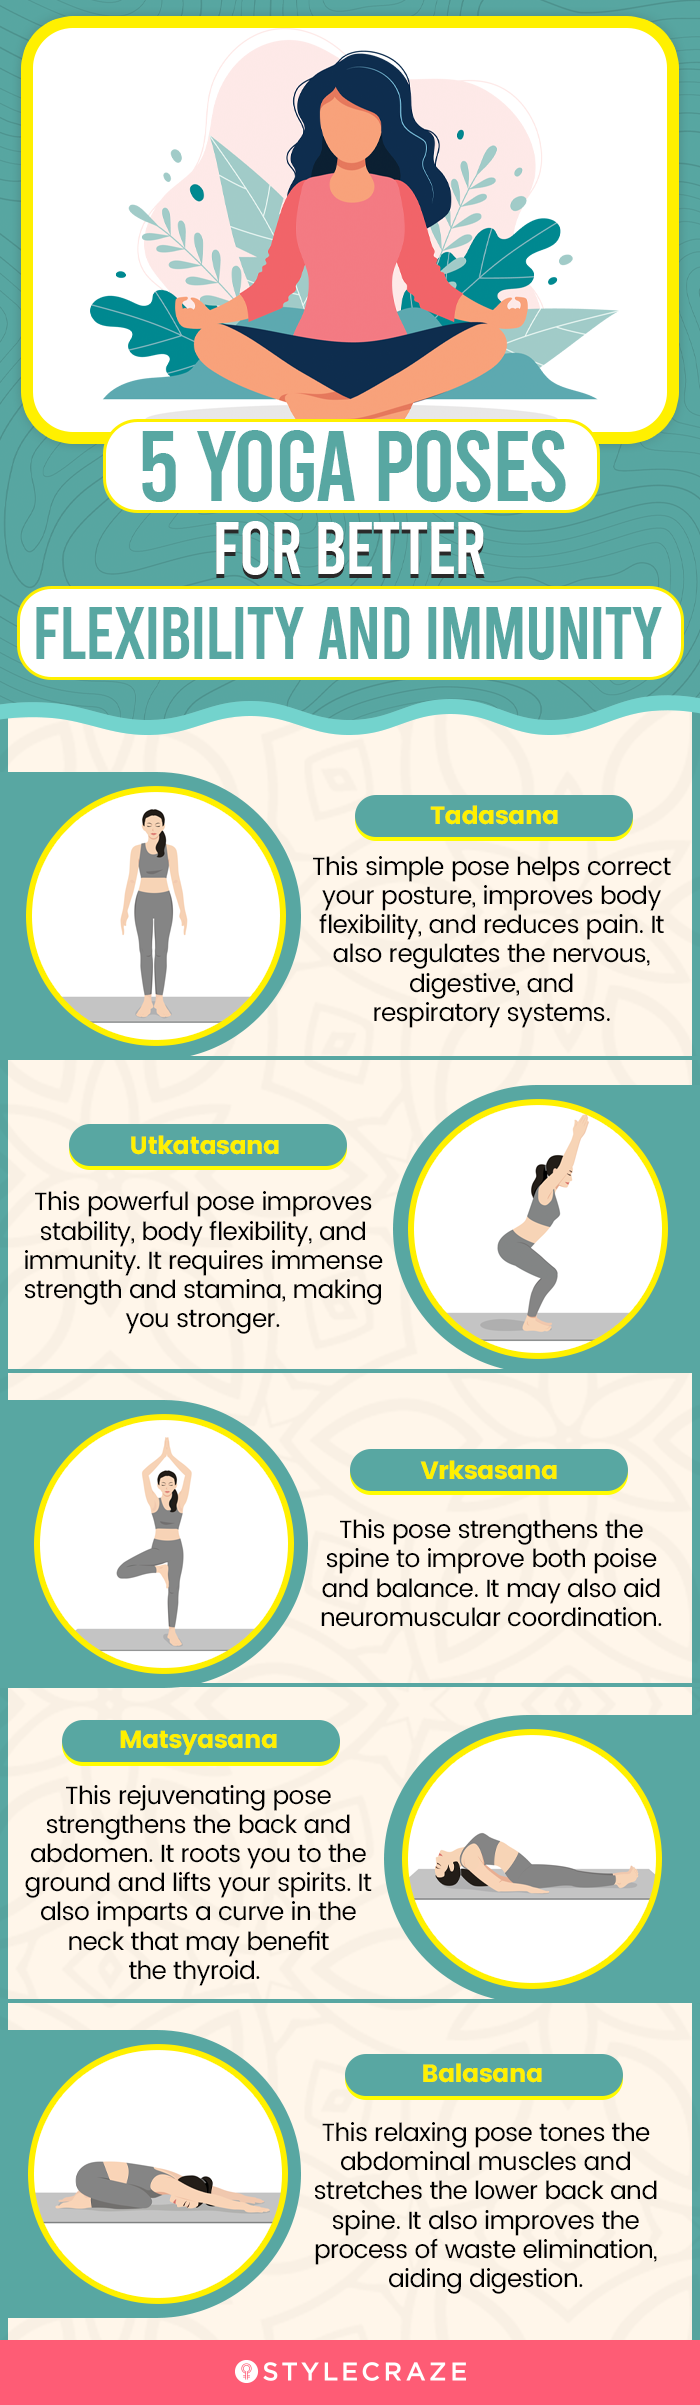 Yoga For Hypothyroidism: Enhance Secretion Of Hormones With These Powerful  Yogasanas